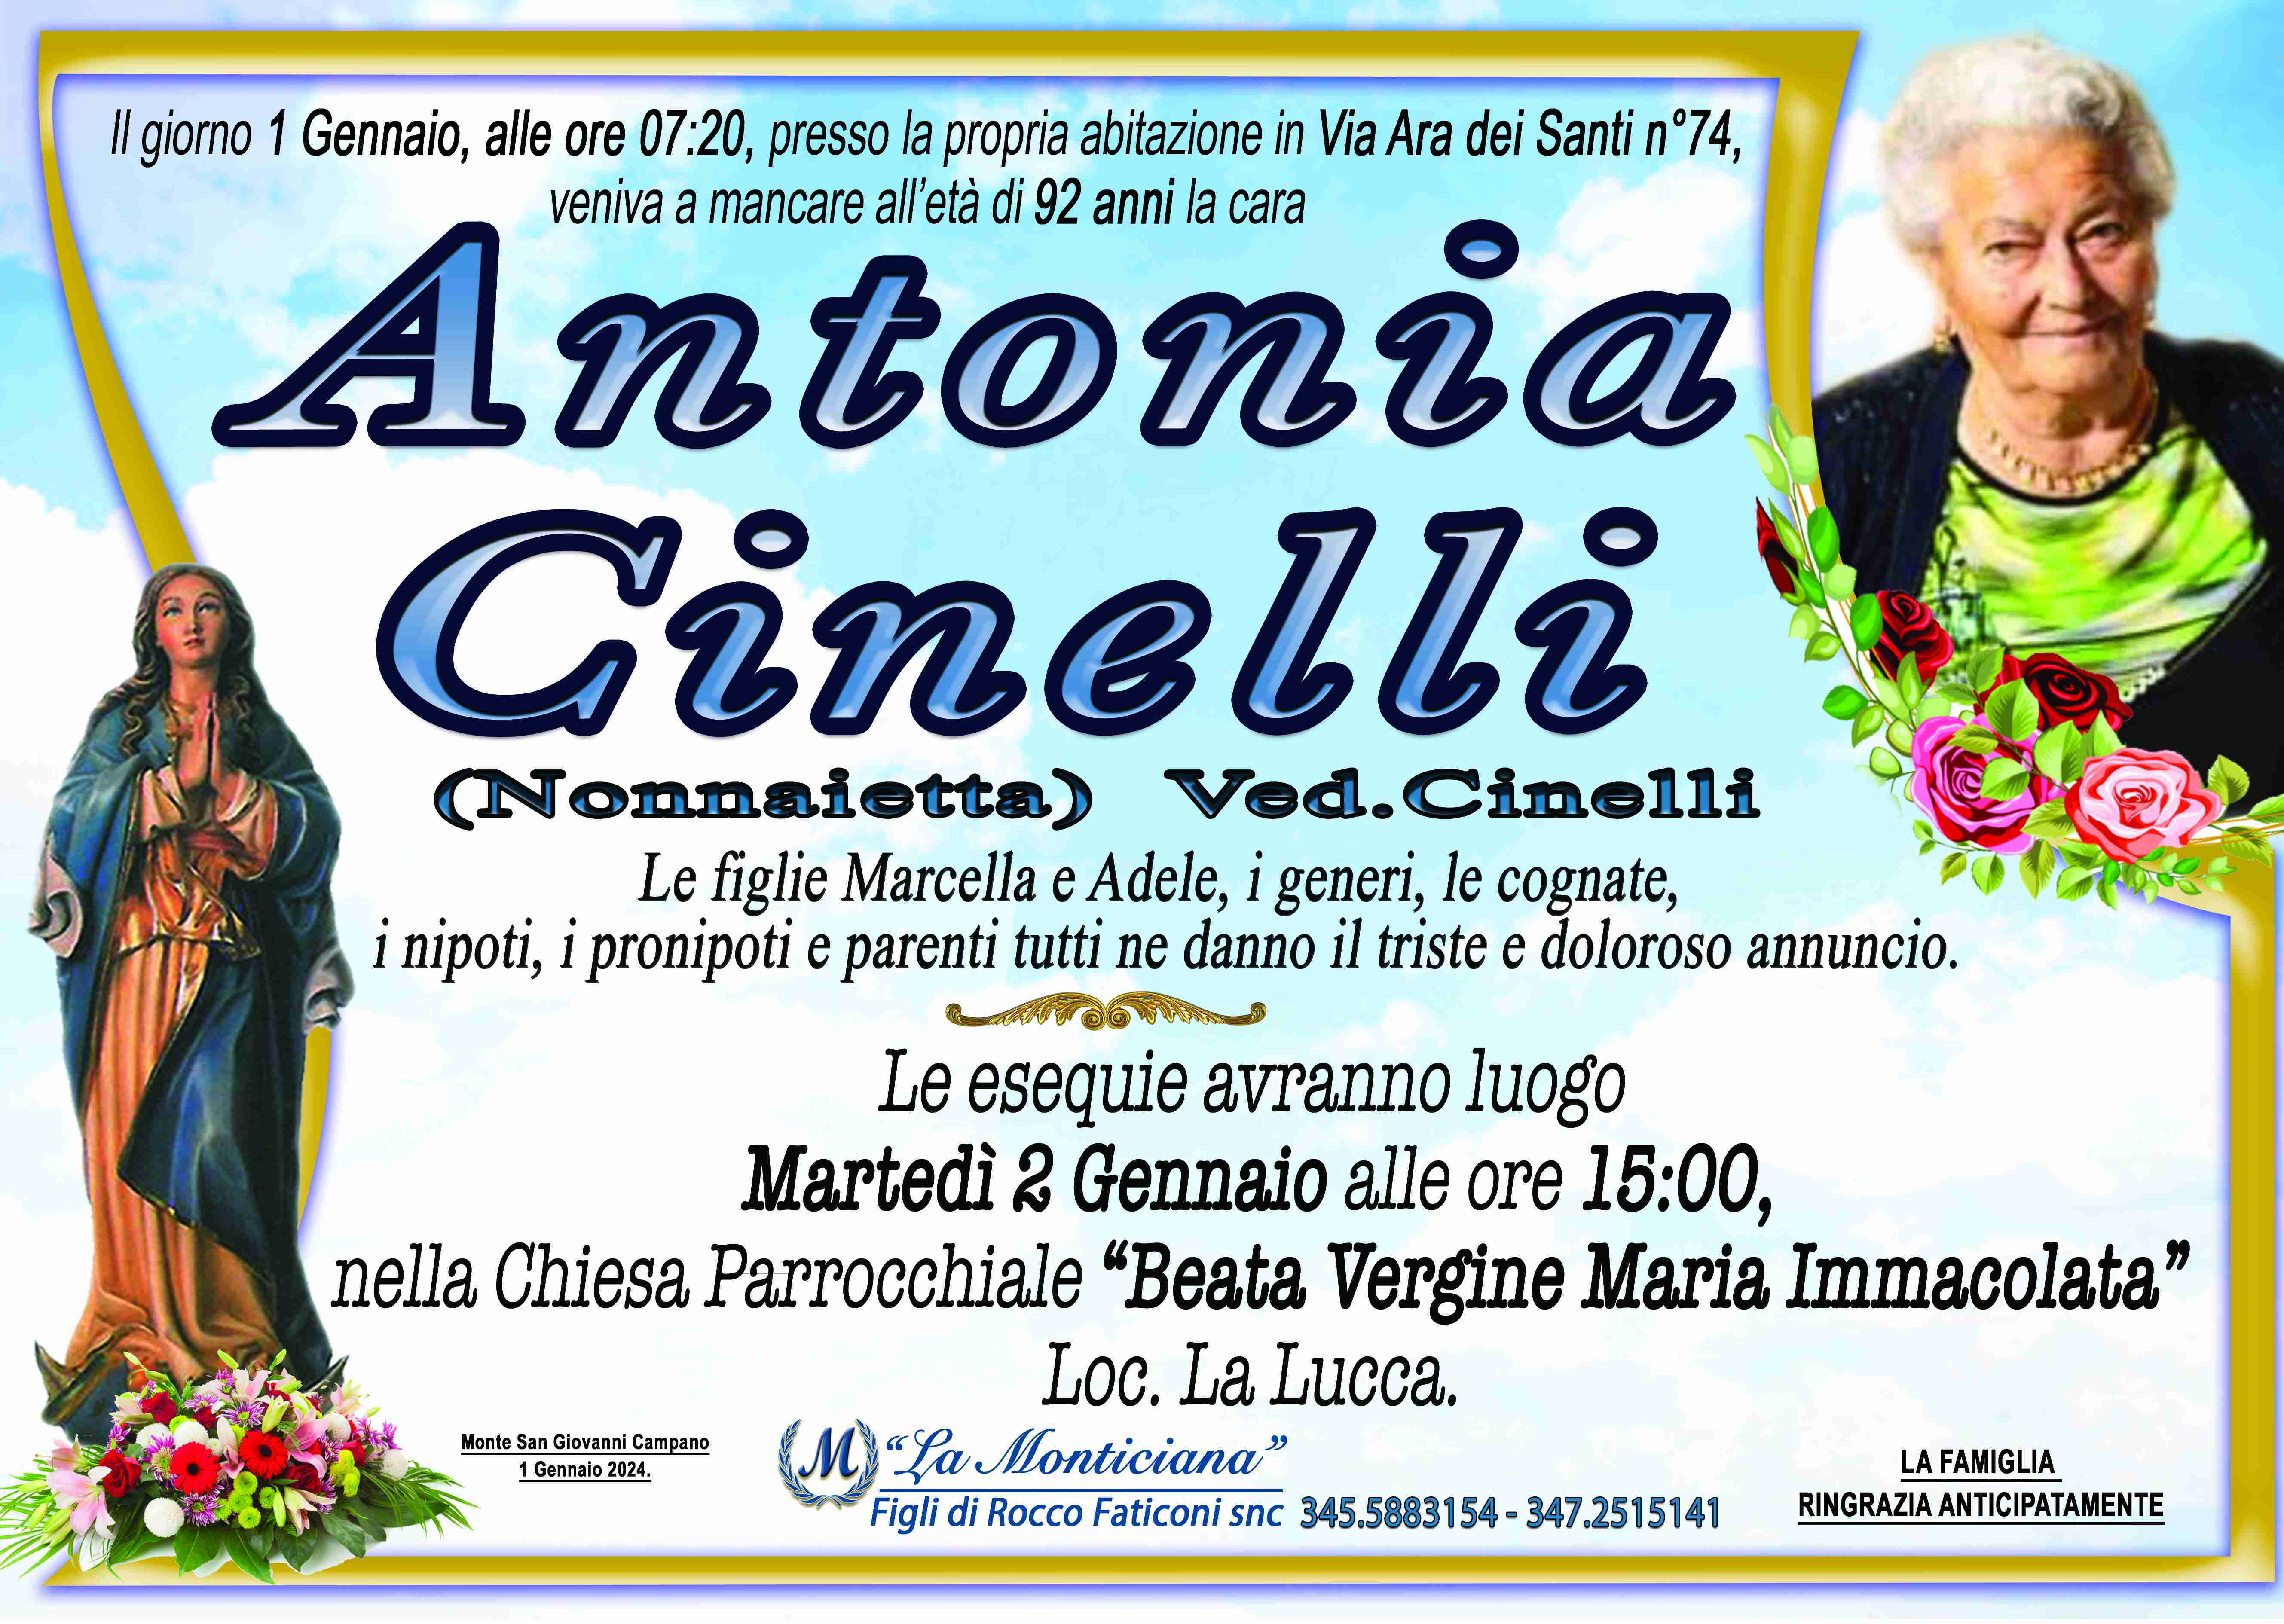 Antonia Cinelli